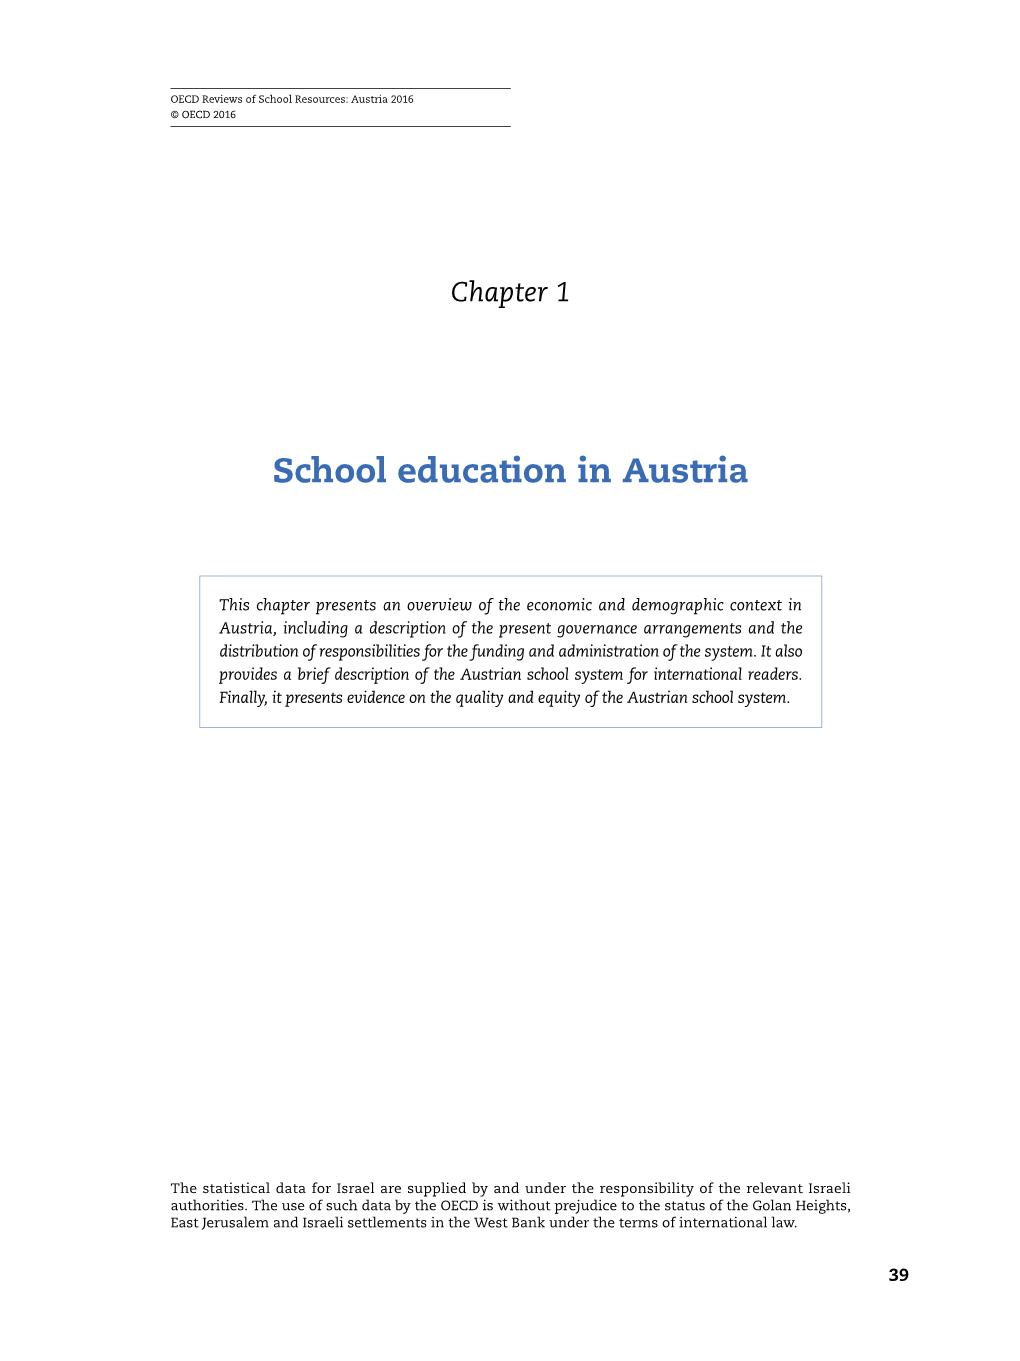 School Education in Austria